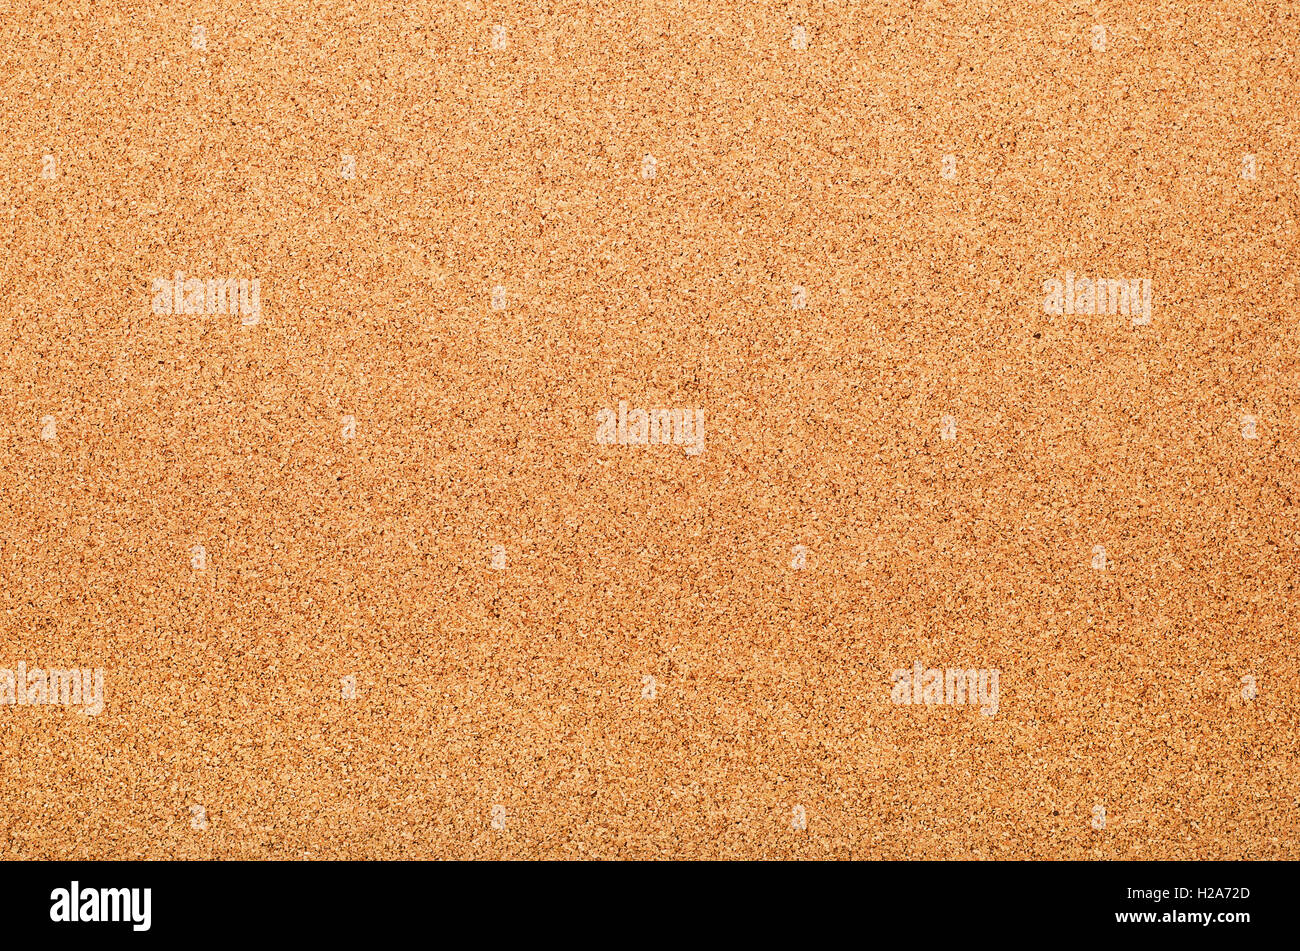 Brown textured cork board closeup background Stock Photo